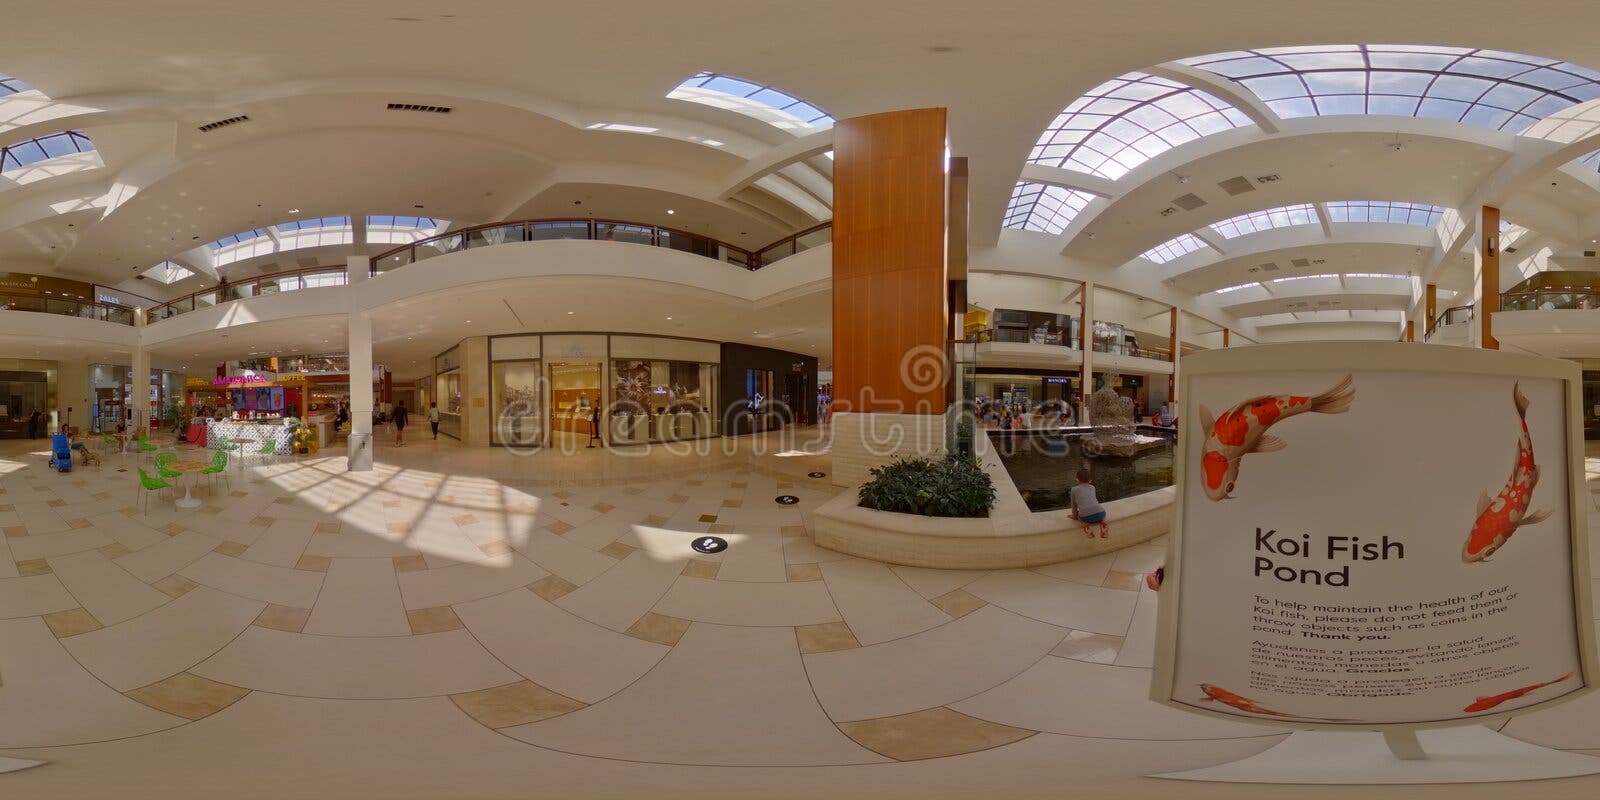 https://thumbs.dreamstime.com/b/vr-photo-inside-aventura-mall-fl-usa-216830908.jpg?w=1600